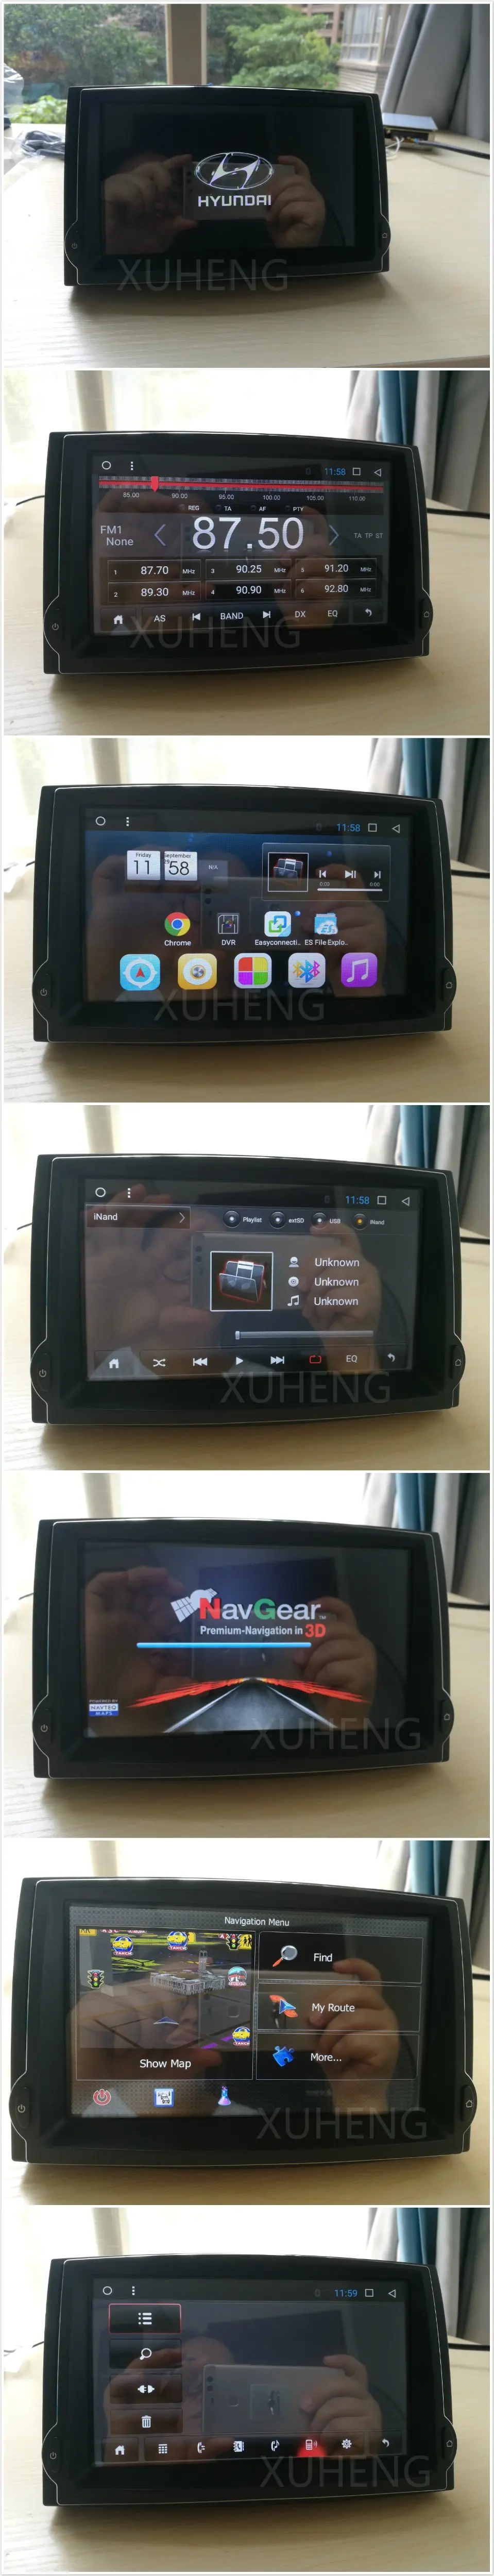 Sale DSP Carplay 2G Ram Android 7.1 7inch Car DVD Gps For Hyundai H1 i800 Grand Strarex iload 2007 - 2012 Car Stereo Radio Navi Audio 1